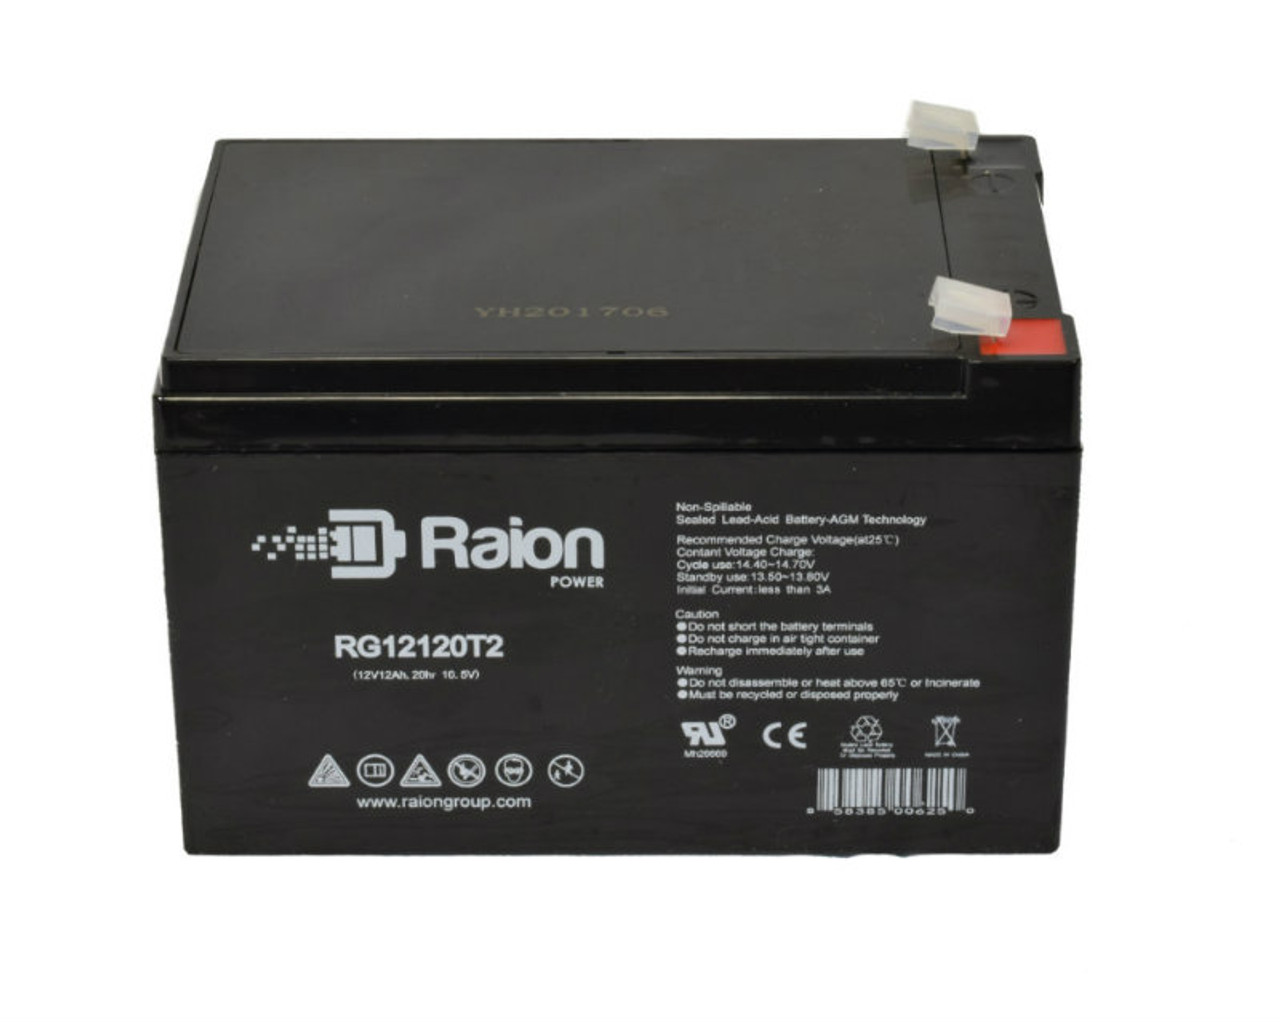 Raion Power RG12120T2 SLA Battery for Emmo Urban